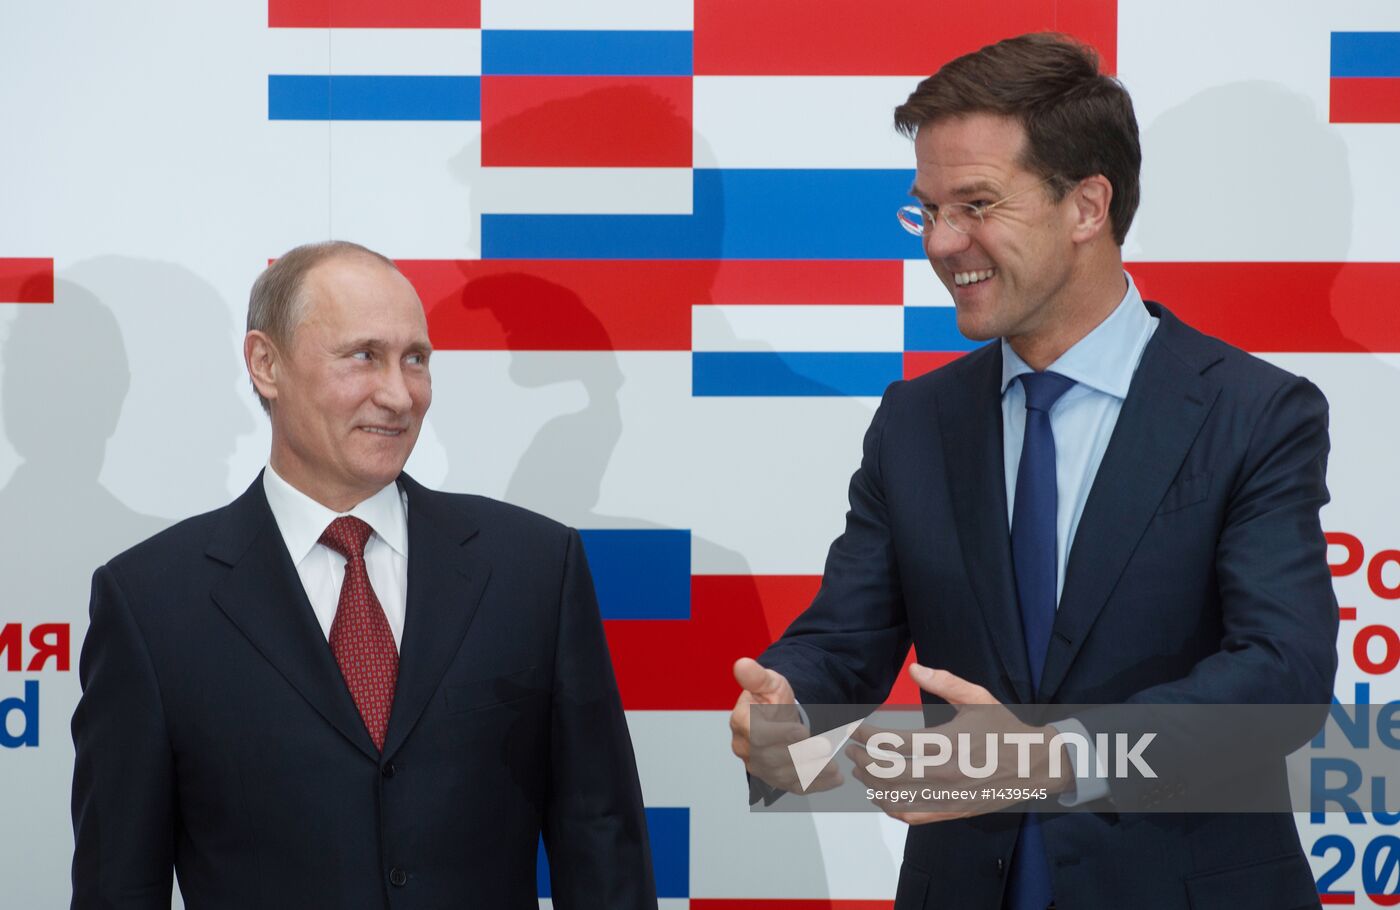 Vladimir Putin on official visit to Netherlands